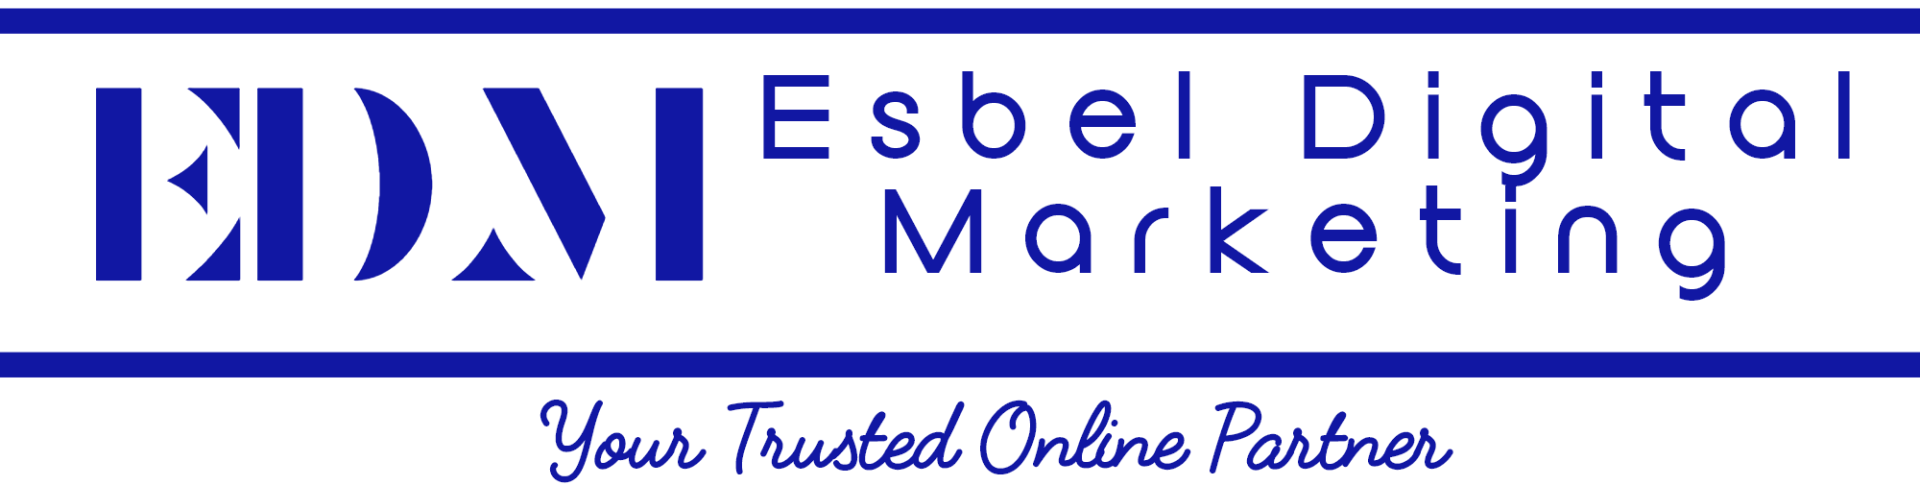 Esbel Digital Marketing - Main Logo